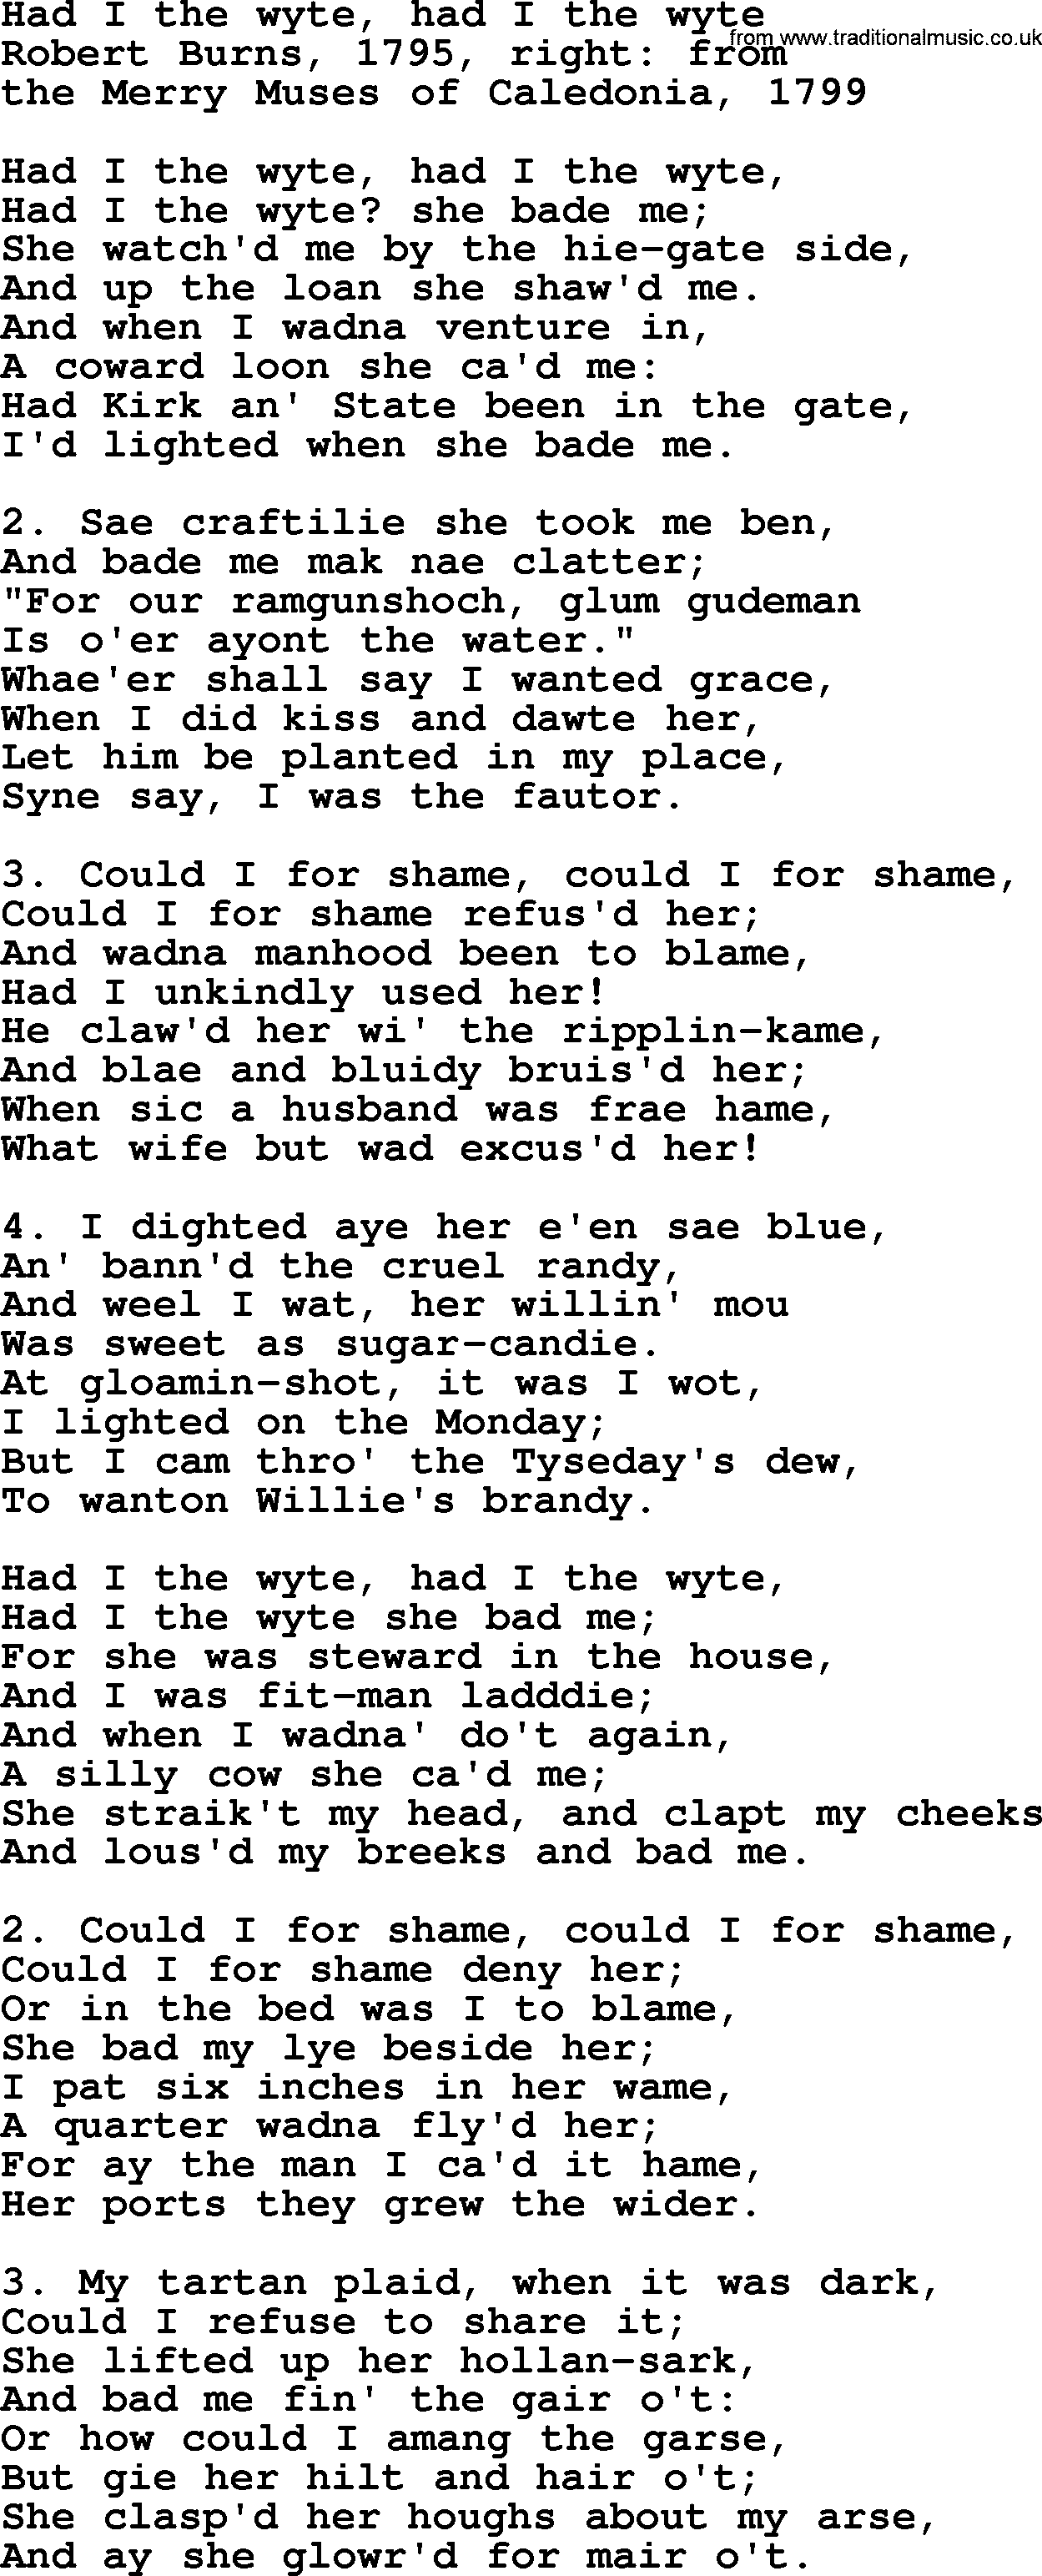 Robert Burns Songs & Lyrics: Had I The Wyte, Had I The Wyte